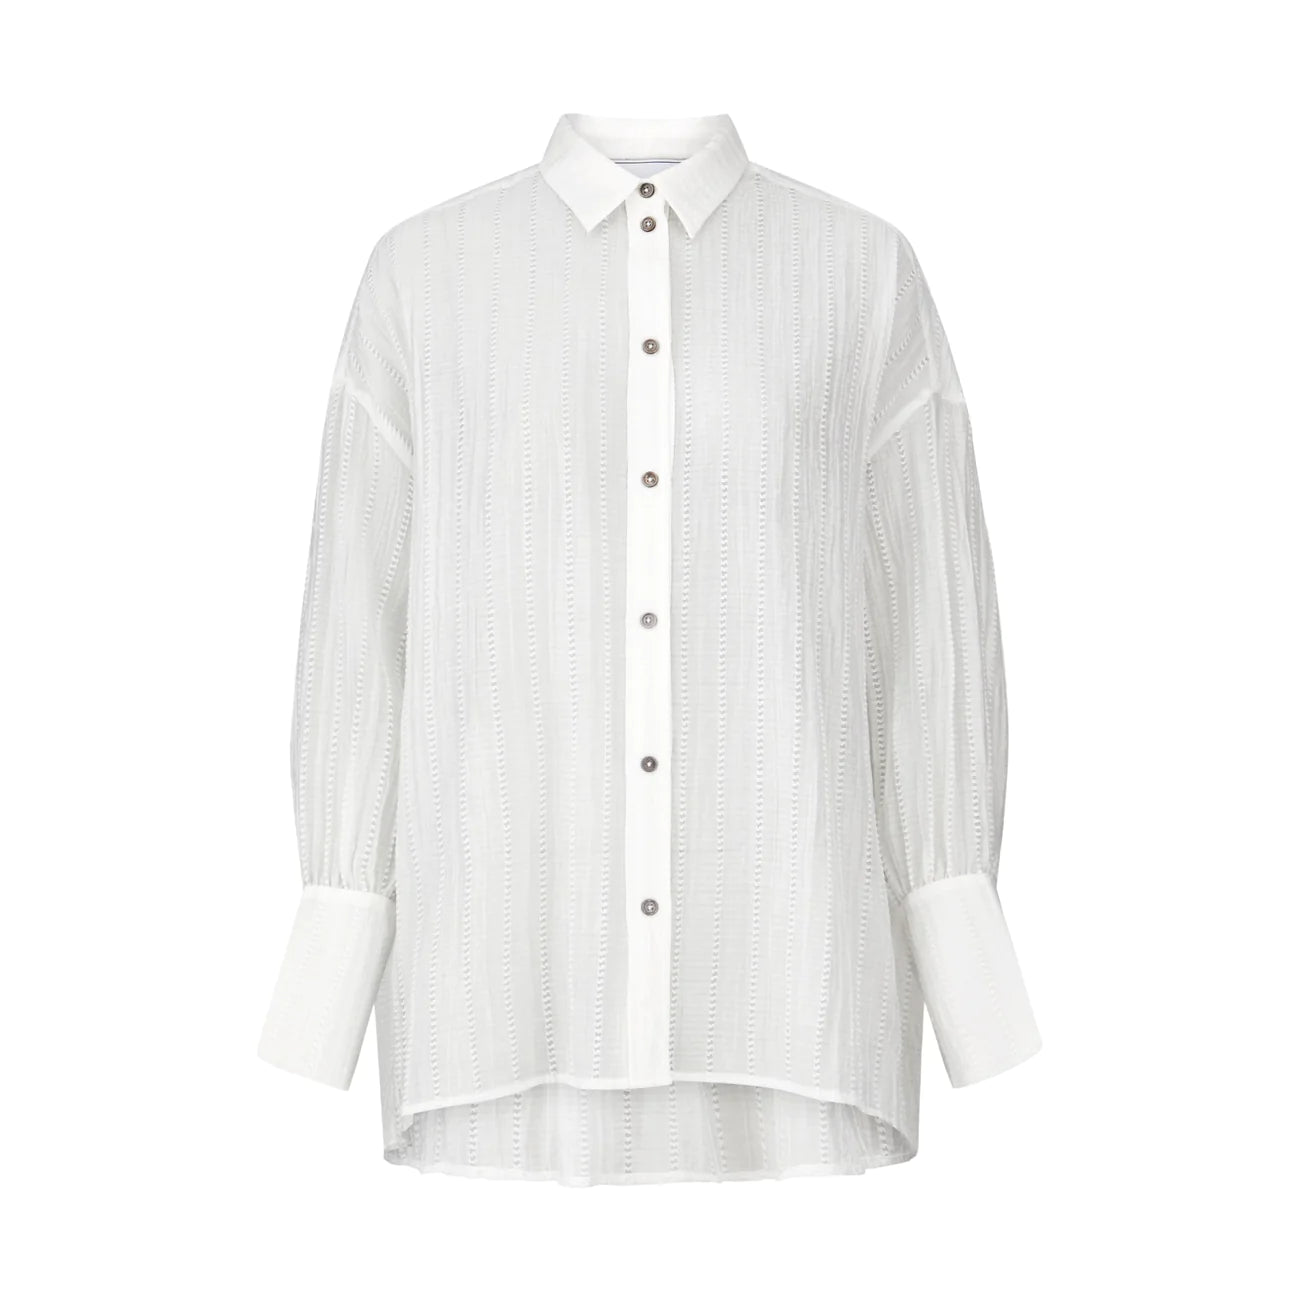 Canary Shirt White